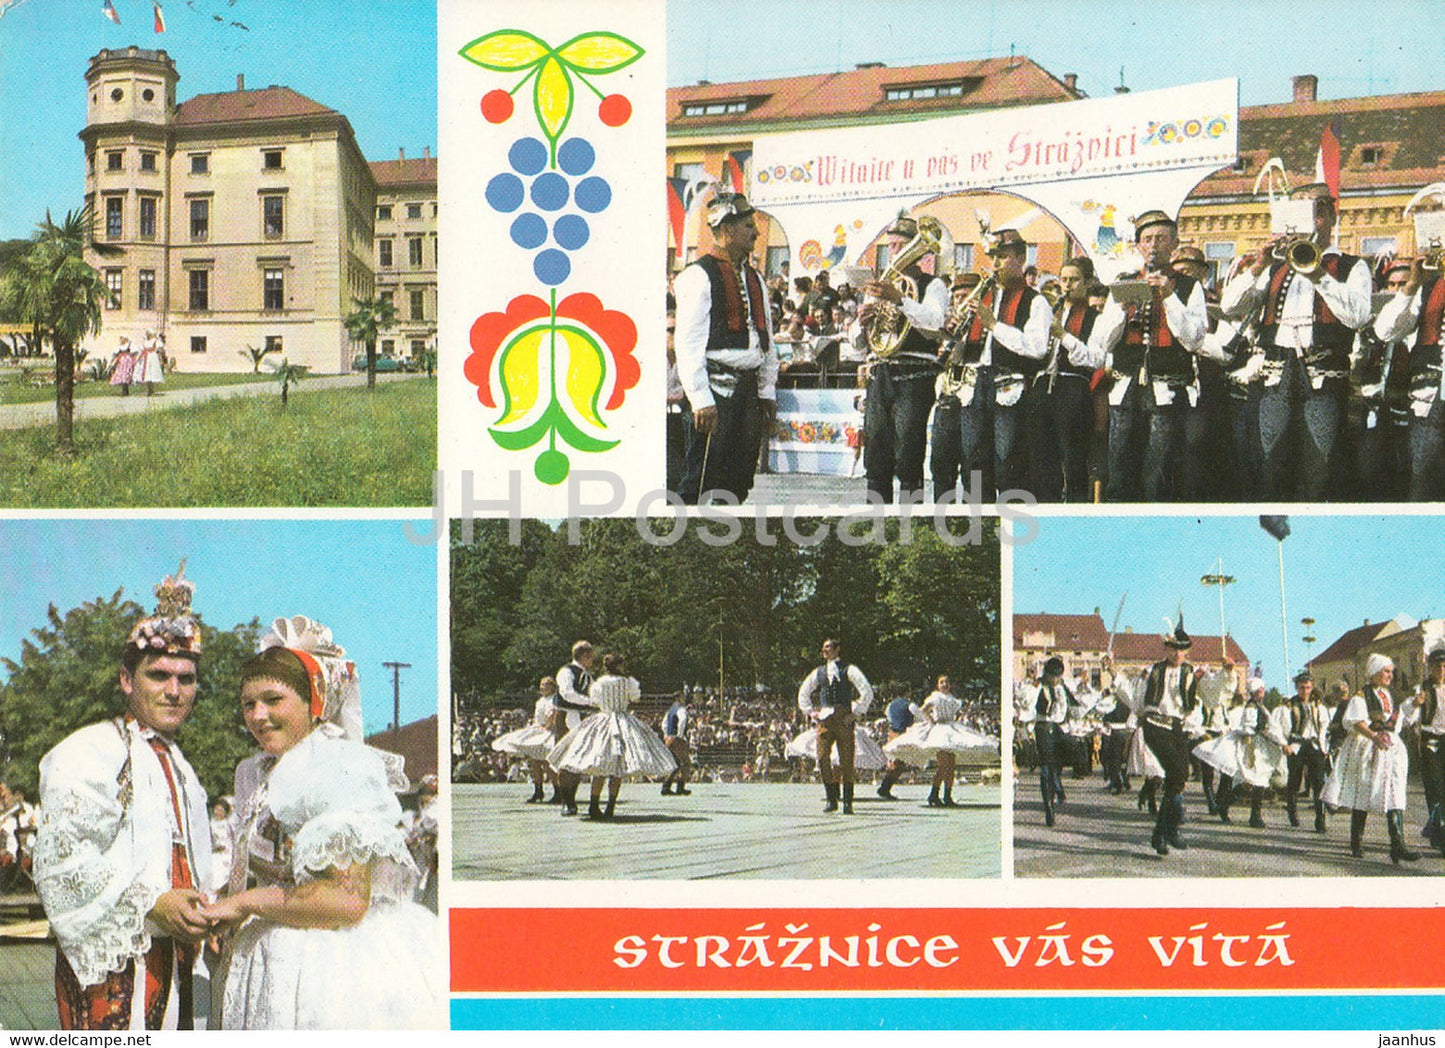 Straznice vas Vita - Czech folk costumes - dance - orchestra - 1973 - Czech Republic - Czechoslovakia - used - JH Postcards